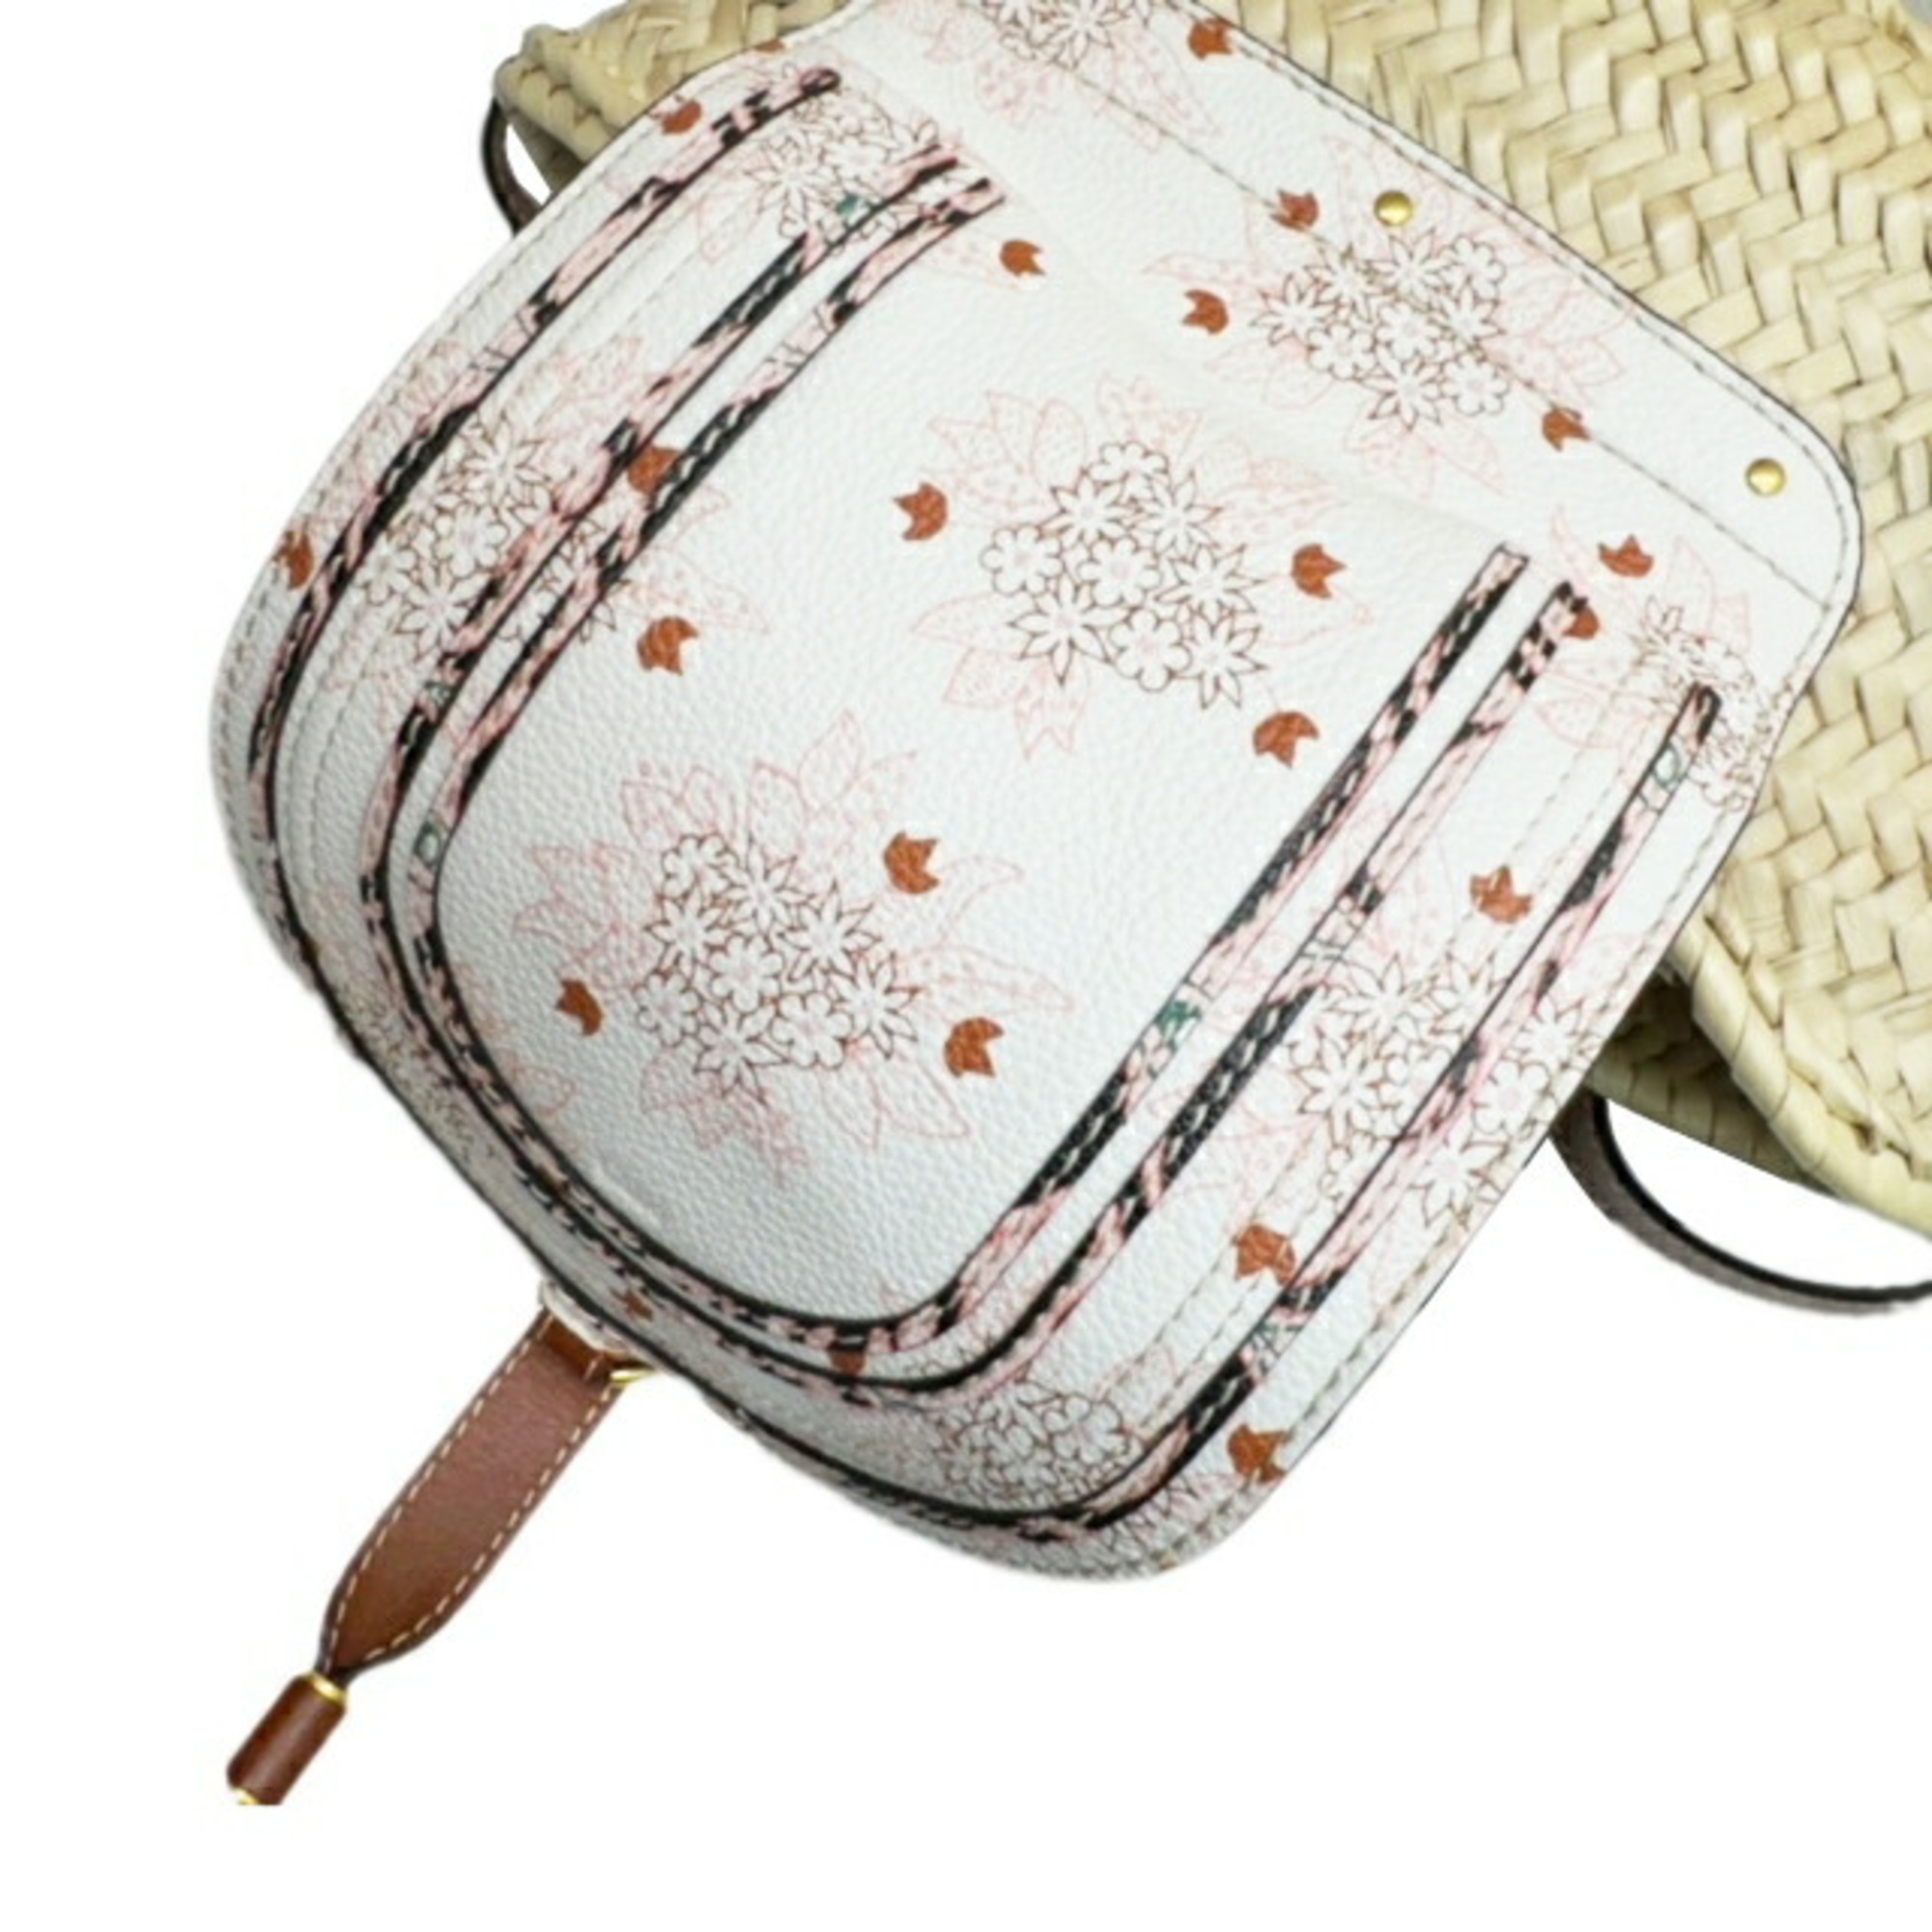 Chloé Chloe Mercy Small Basket Shoulder Bag Floral Leather Raffia Ladies Ivory Pink Brown